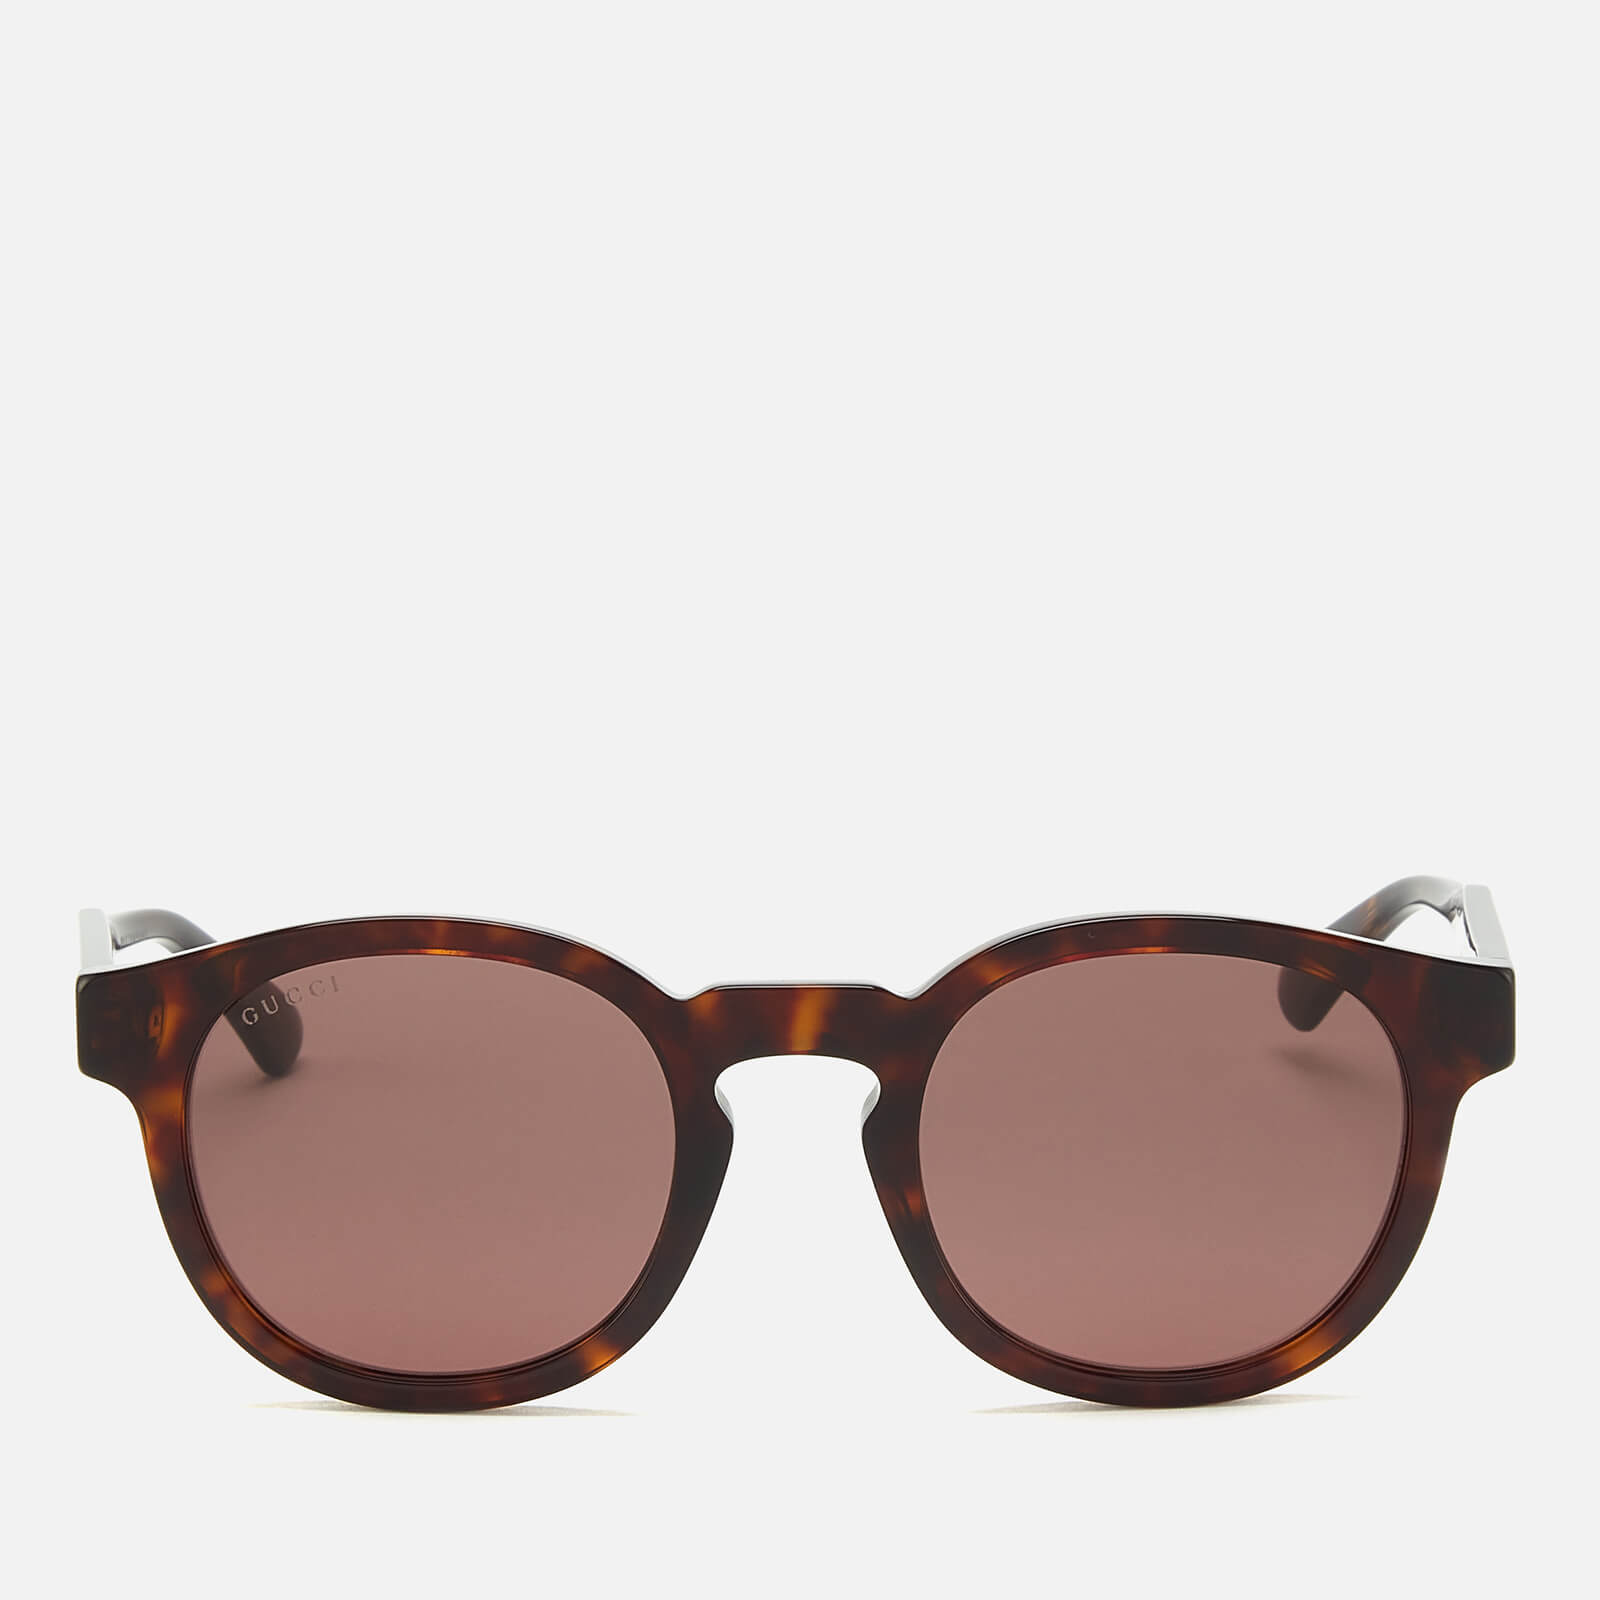 Gucci Men's Acetate Frame Sunglasses - Shiny Dark Havana